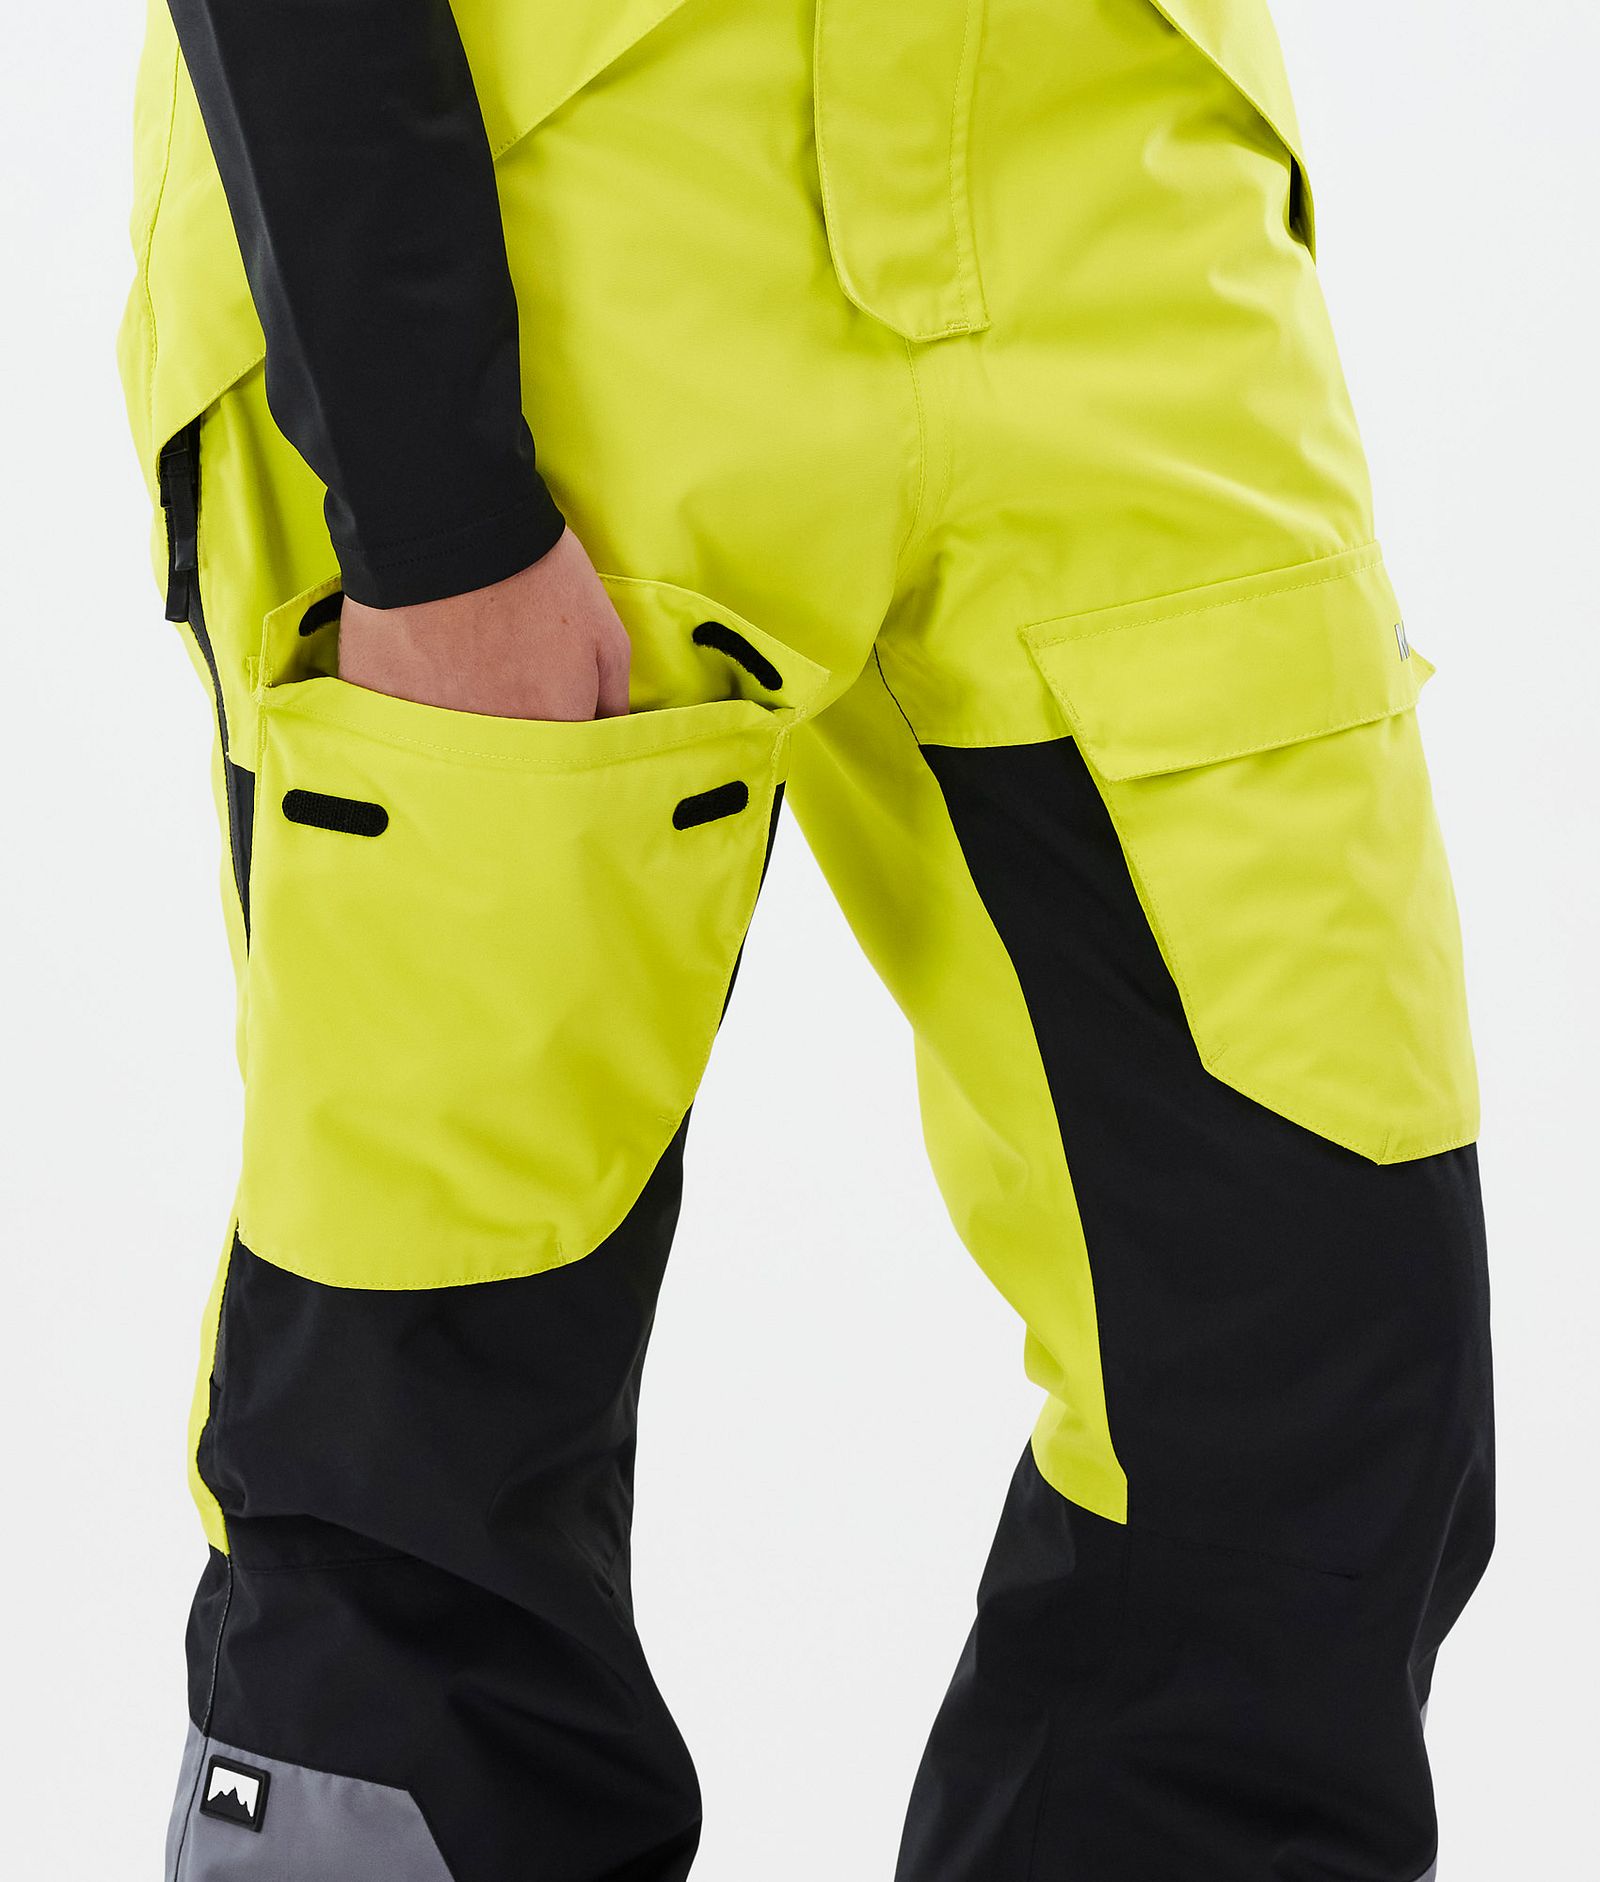 Montec Fawk W Kalhoty na Snowboard Dámské Bright Yellow/Black/Light Pearl